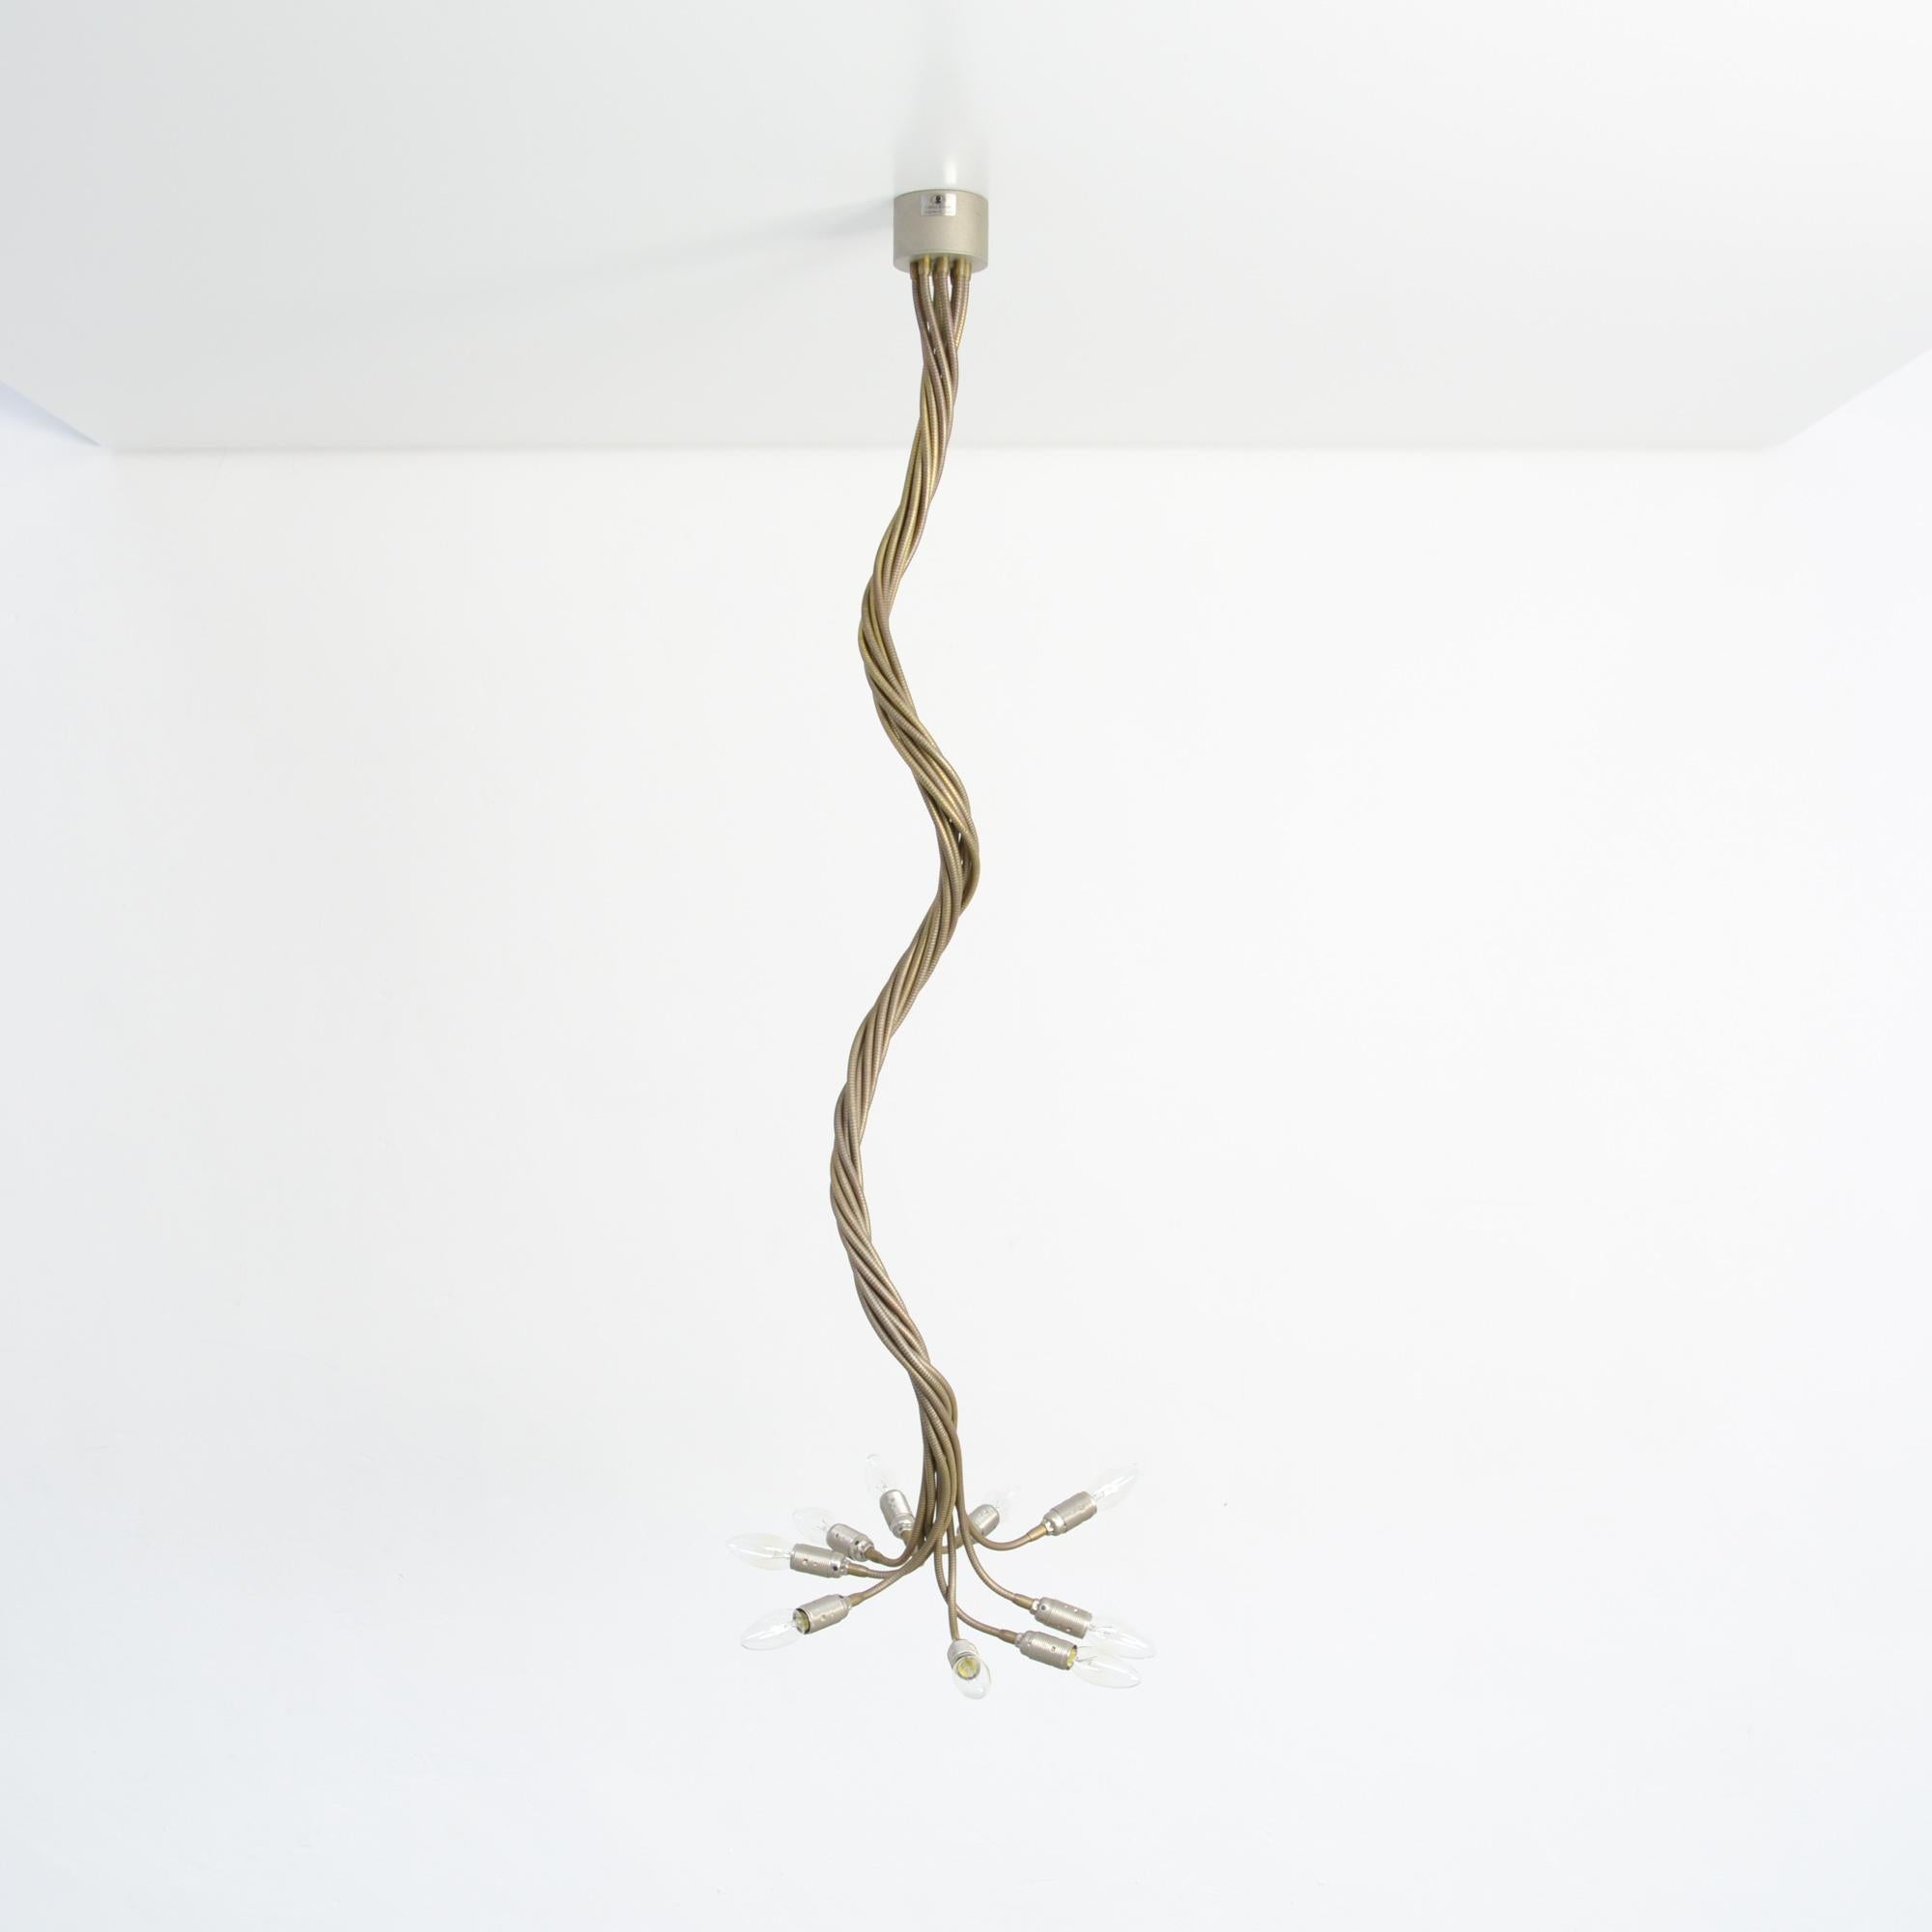 Metal Turciu 9 Wall or Ceiling Lamp by Enzo Catellani for Catellani & Smith